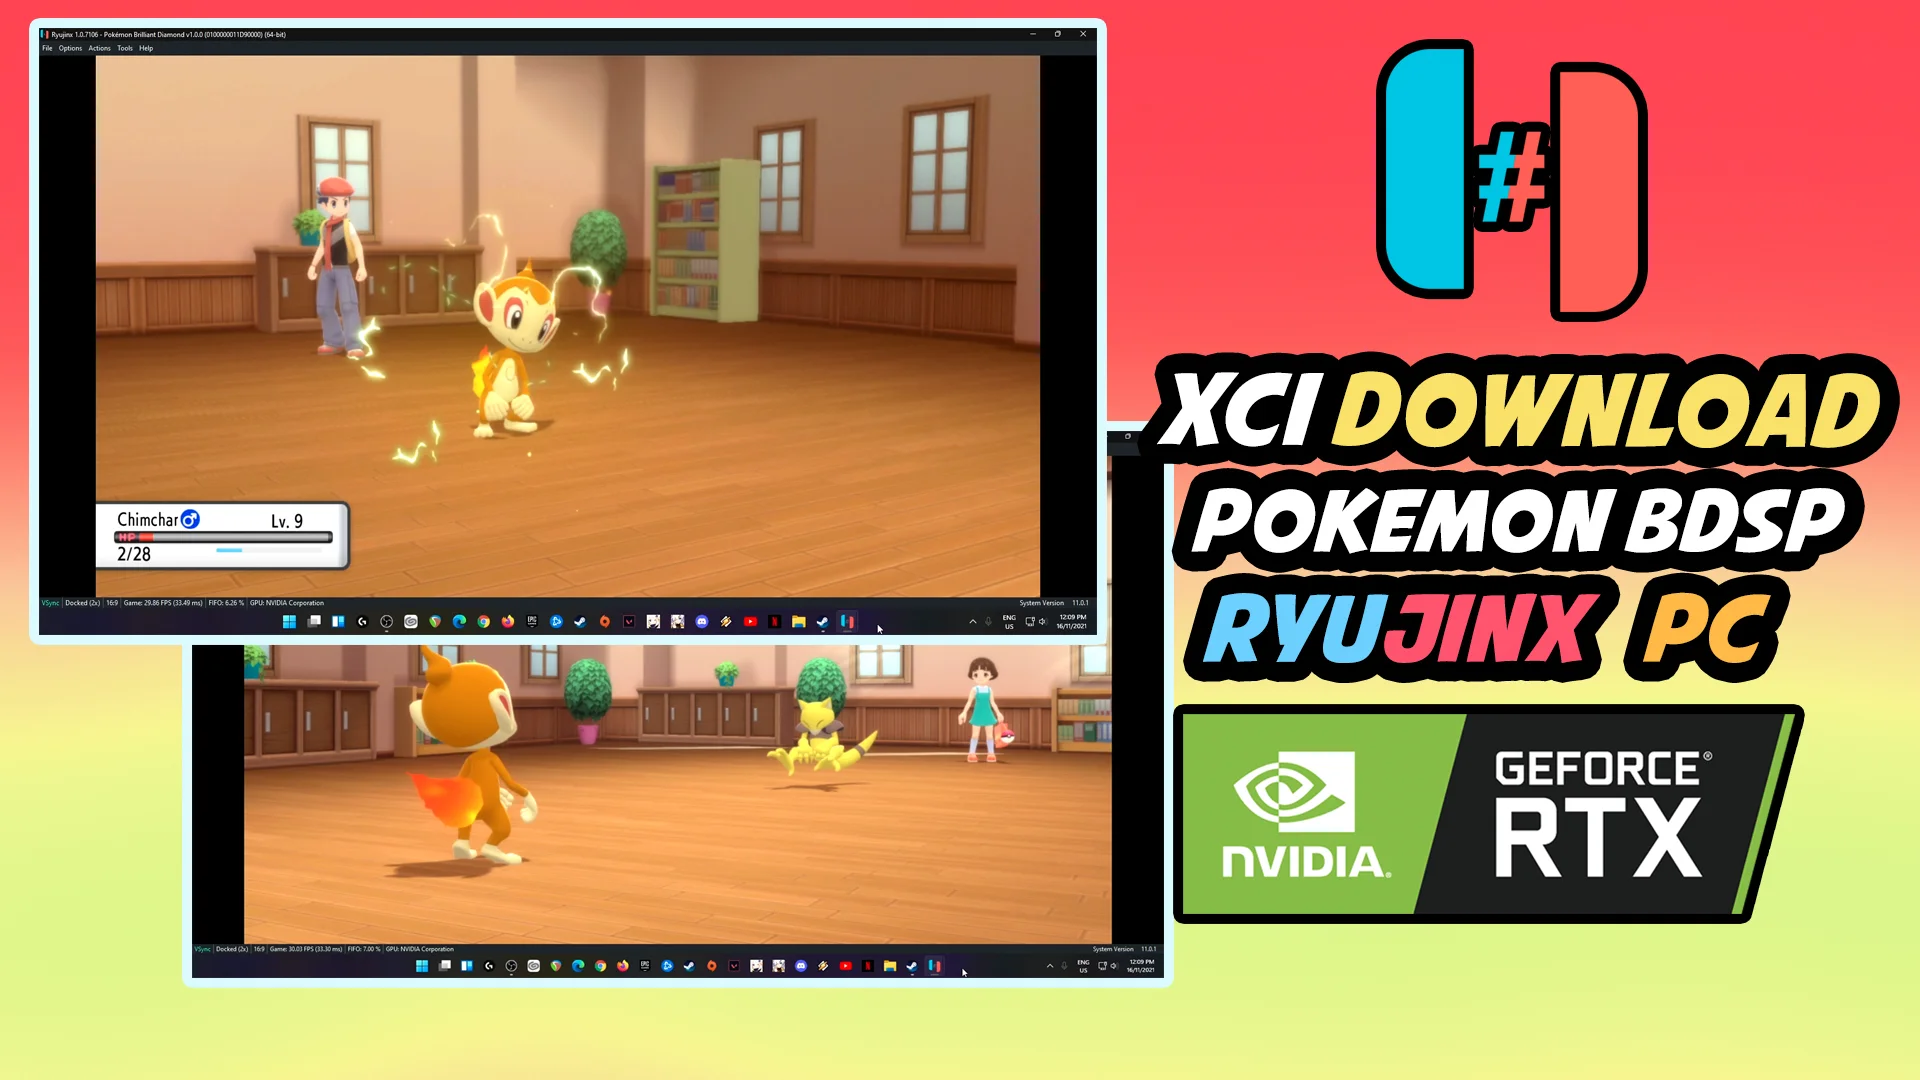 How To Play Pokemon Brilliant Diamond on PC + Yuzu Emulator on Vimeo